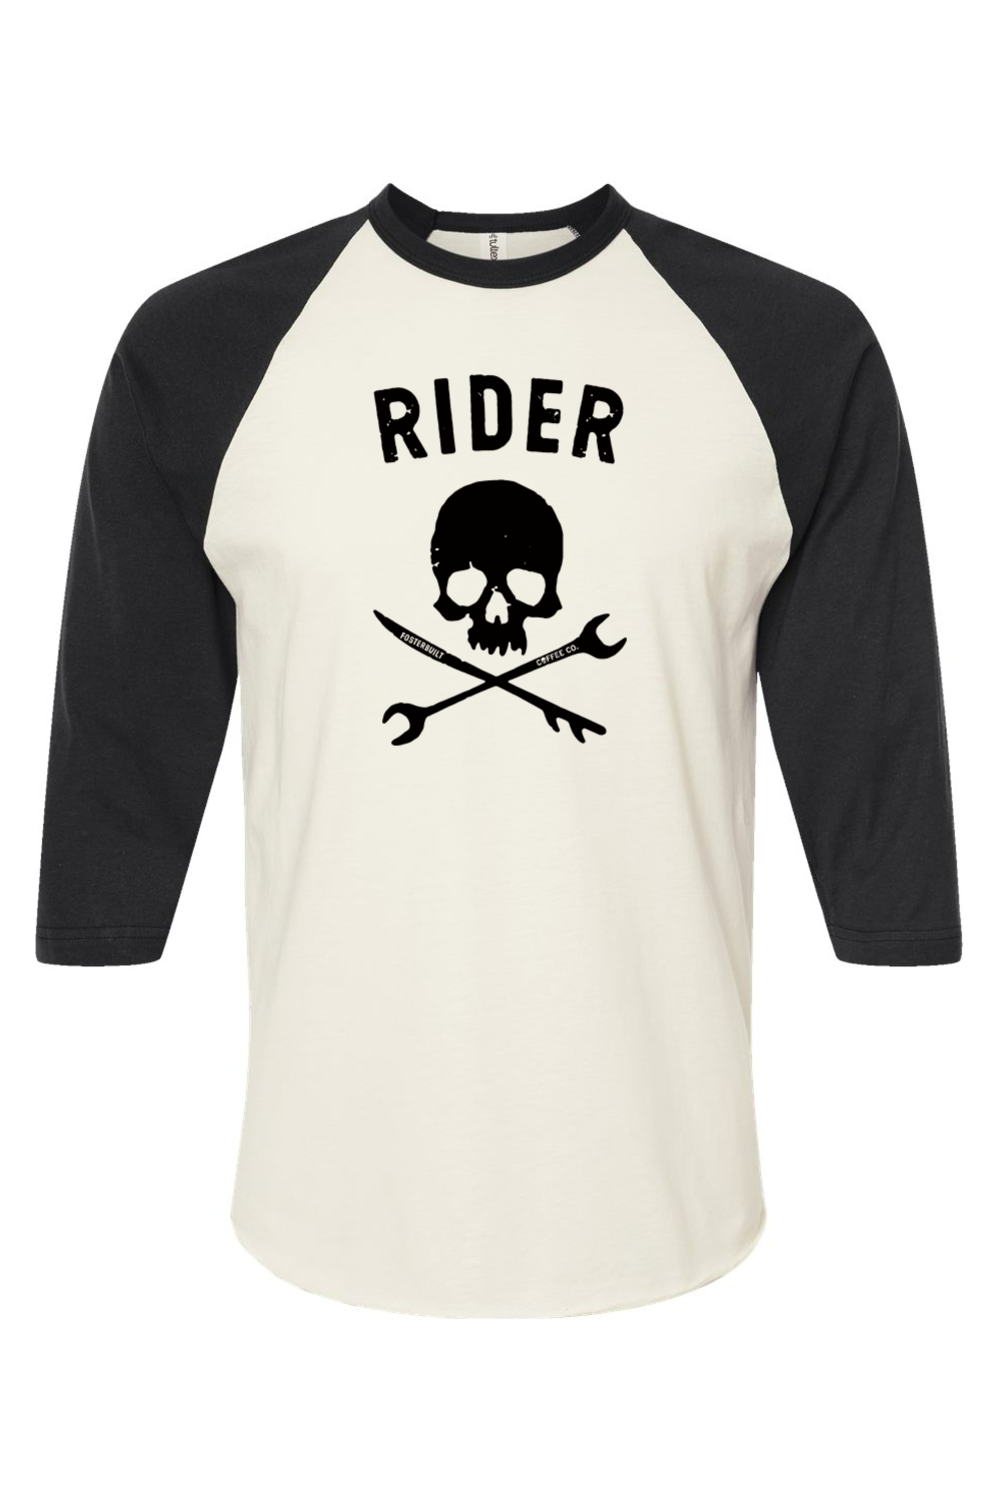 RIDER - Unisex Baseball T-Shirt